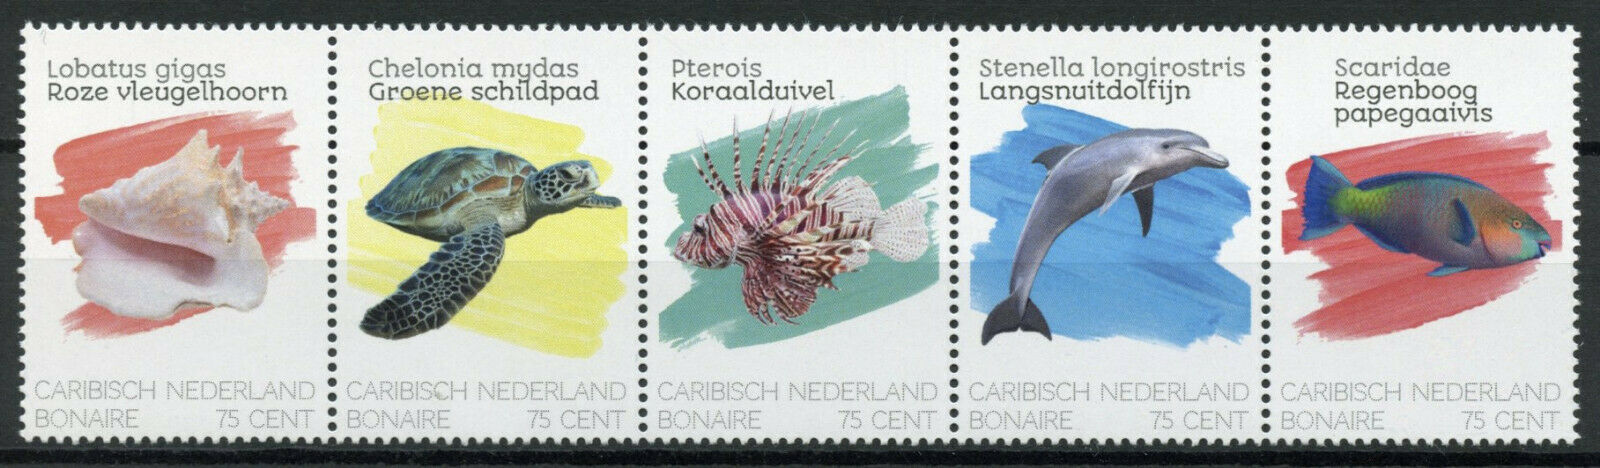 Bonaire Caribbean Netherlands Fish Stamps 2020 MNH Dolphins Turtles 5v Strip